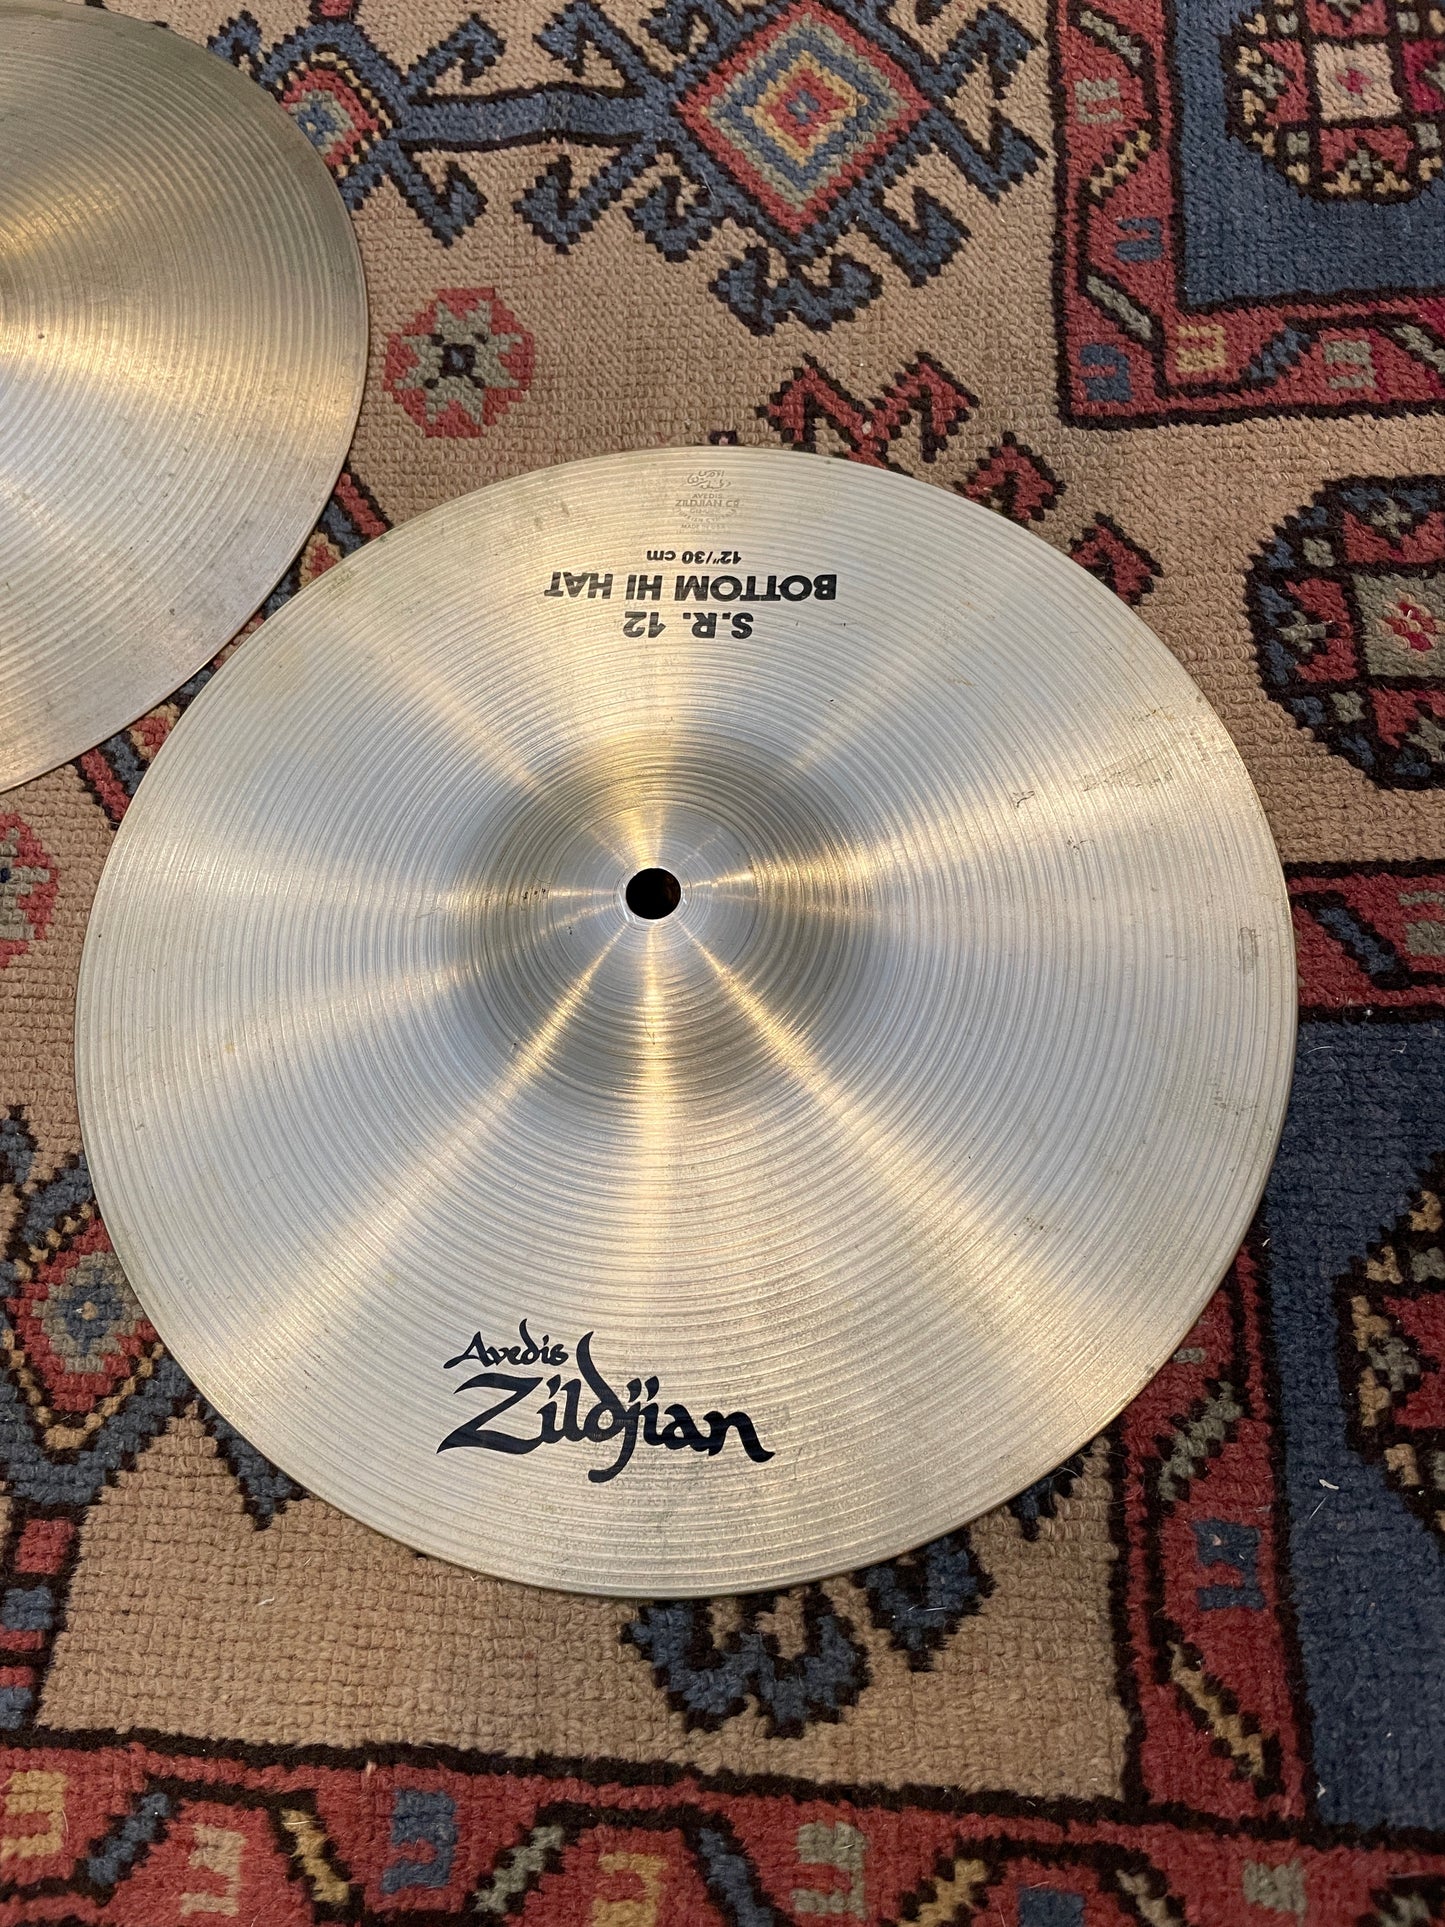 12" Zildjian A Studio Recording S.R. Hi-Hat Cymbal Pair 676g/750g